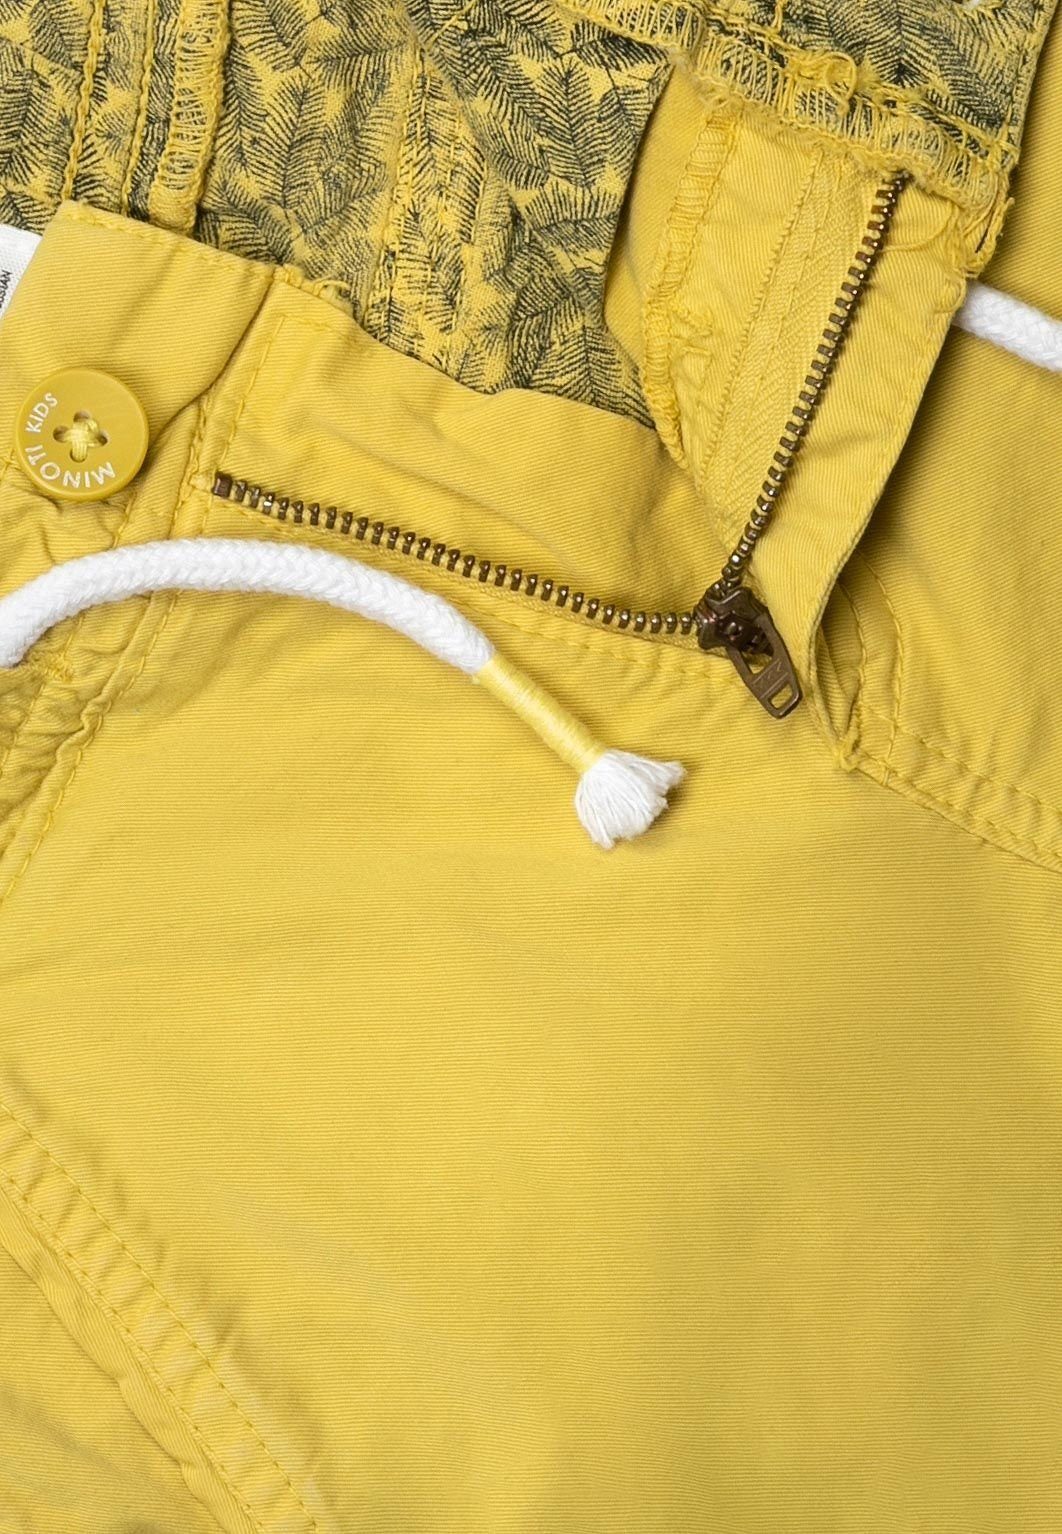 MINOTI Gelb Shorts Shorts (1y-8y)